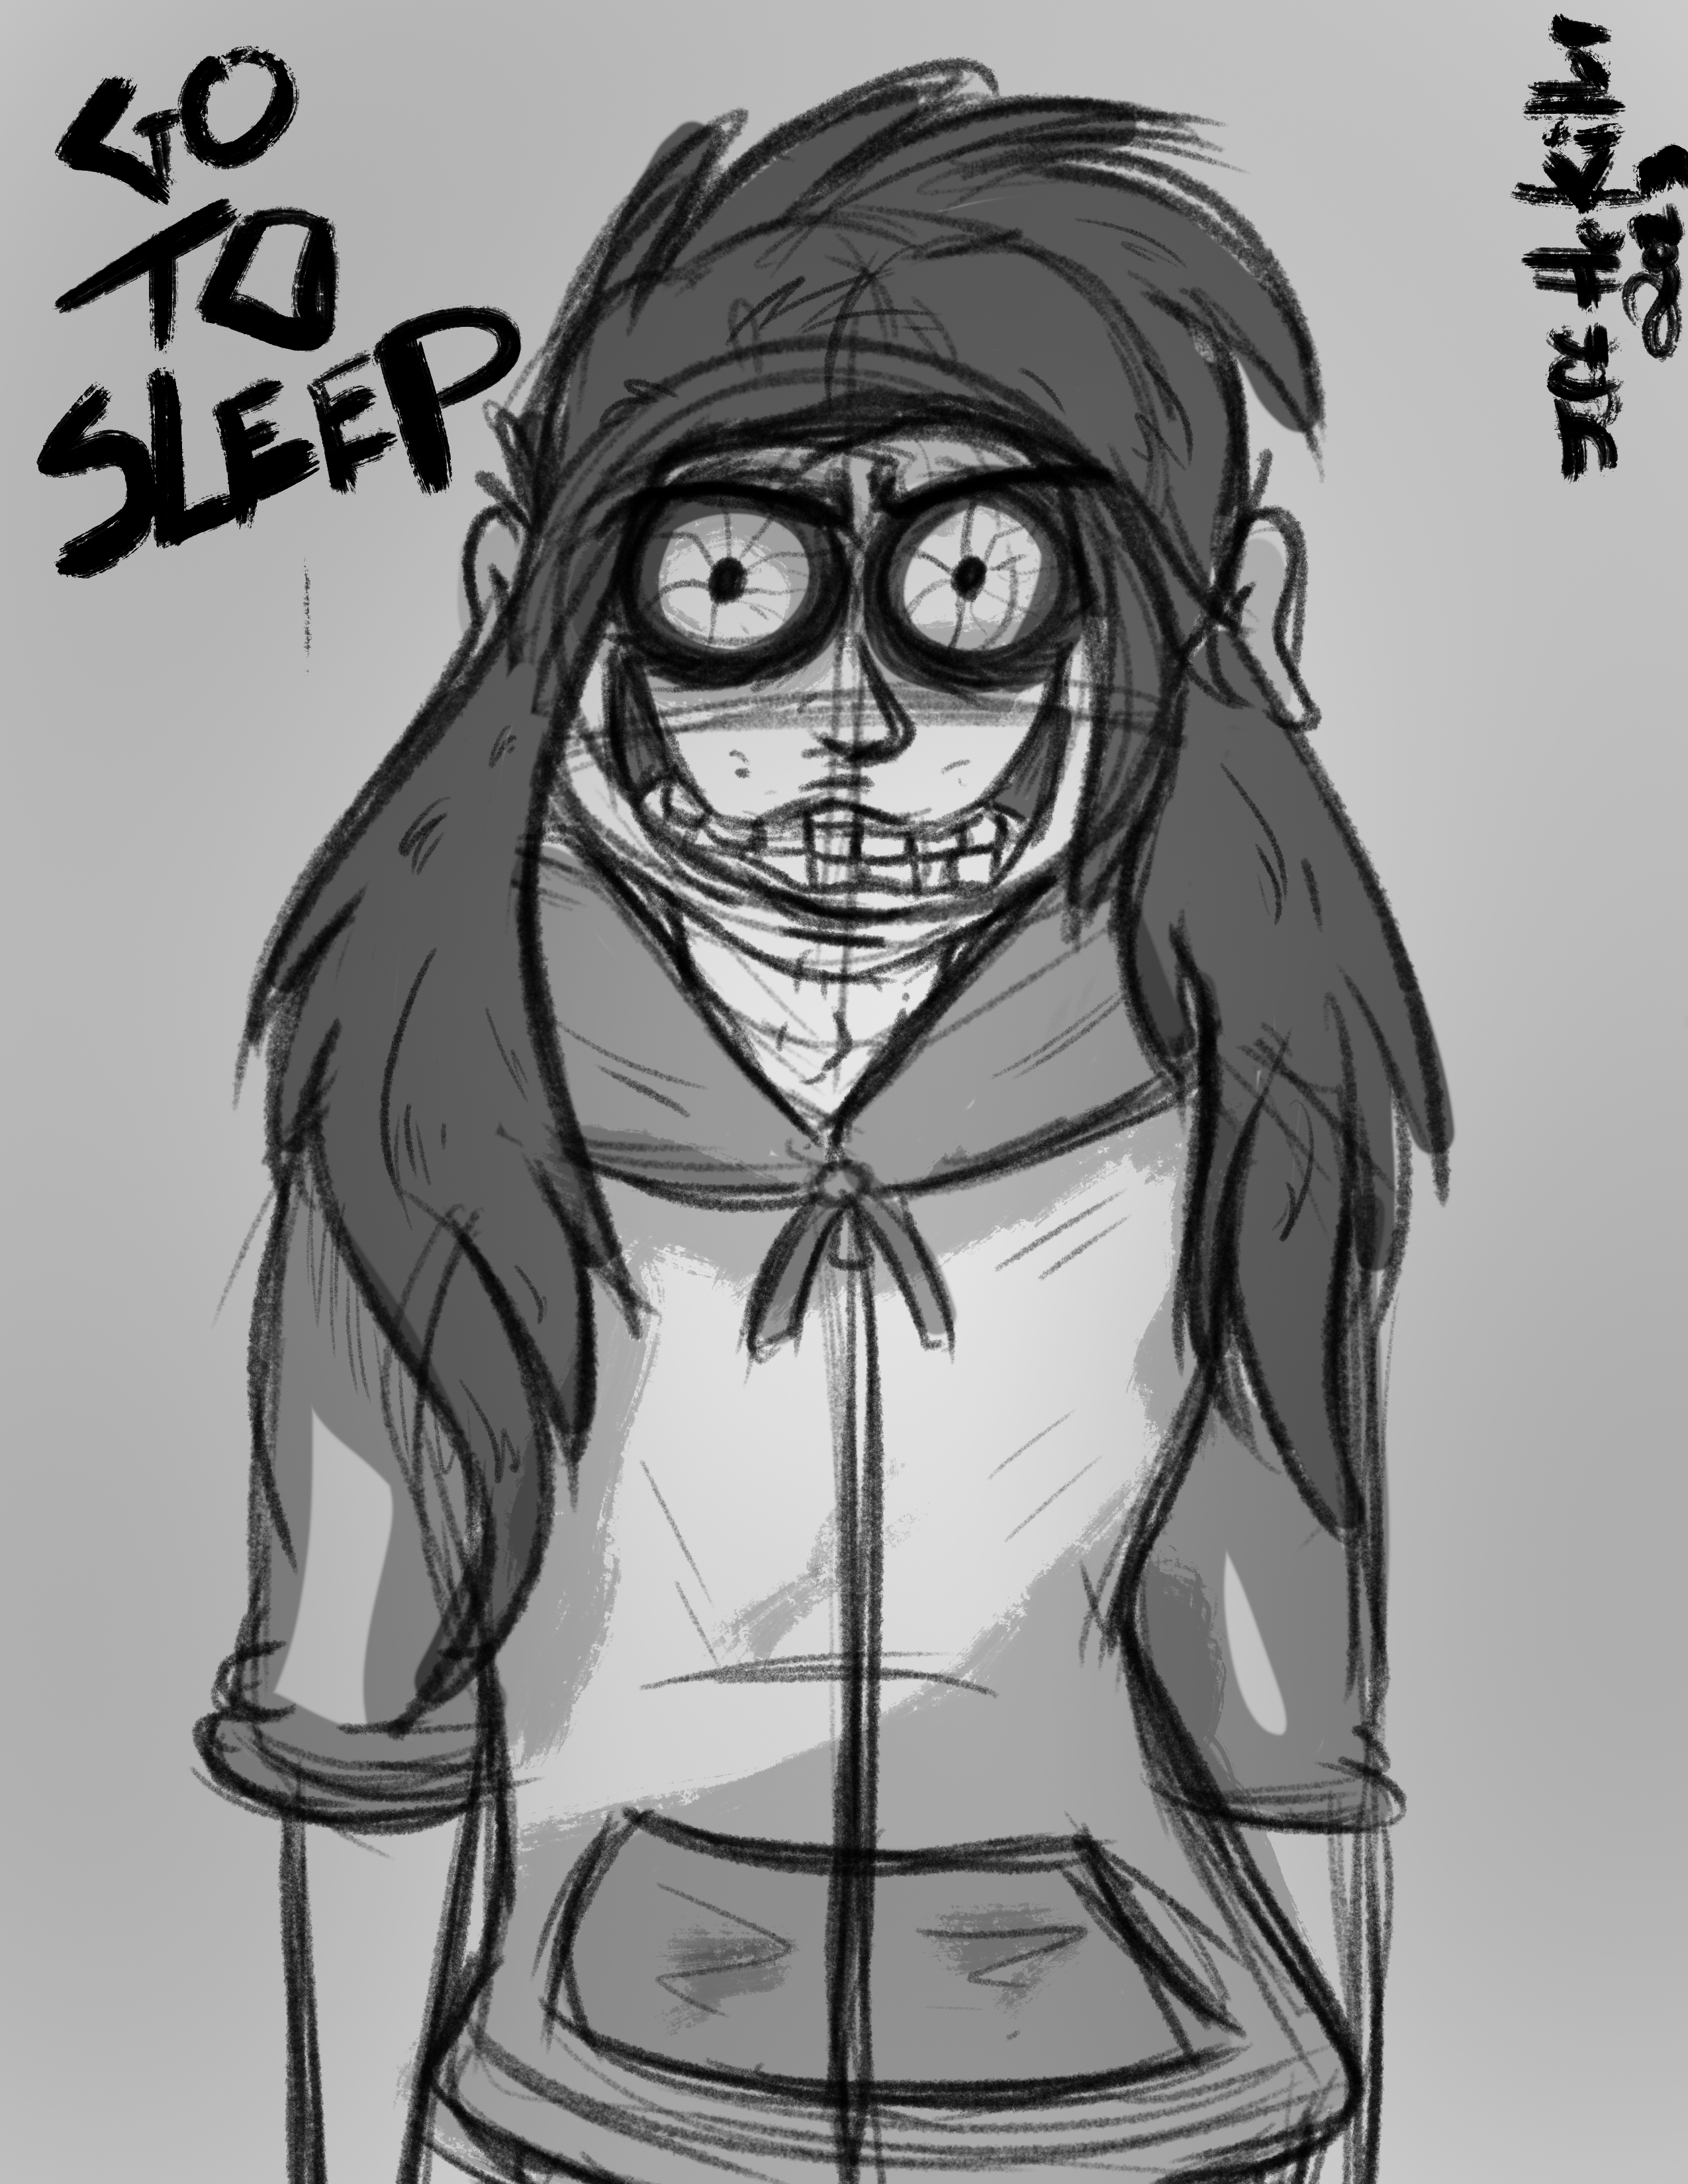 Jeff the Killer, CreepyPasta Character pics (both animated and real life  versions)